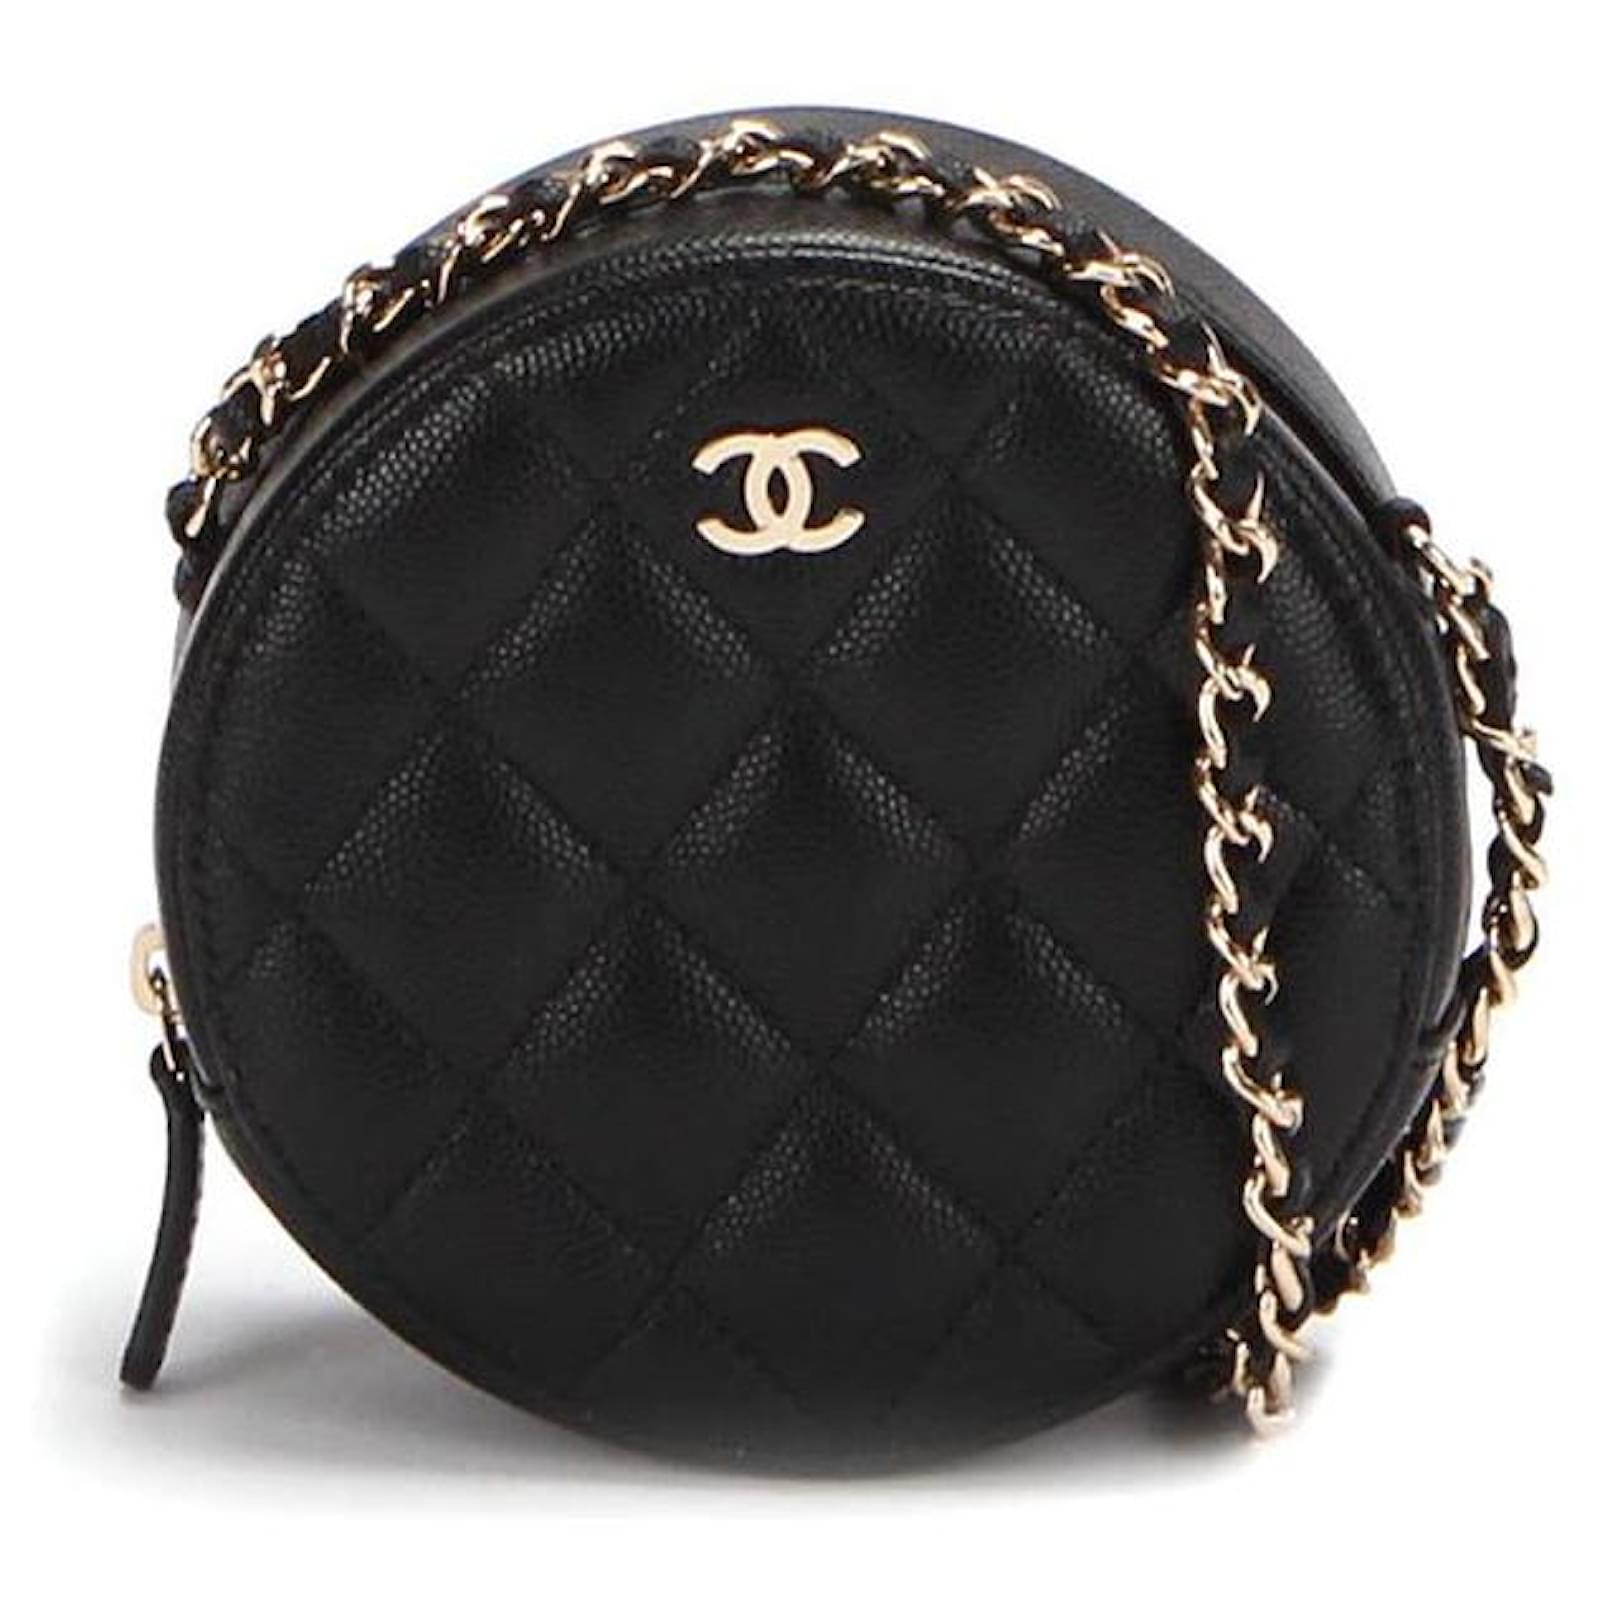 Chanel Caviar Round Chain Crossbody Bag in black calf leather